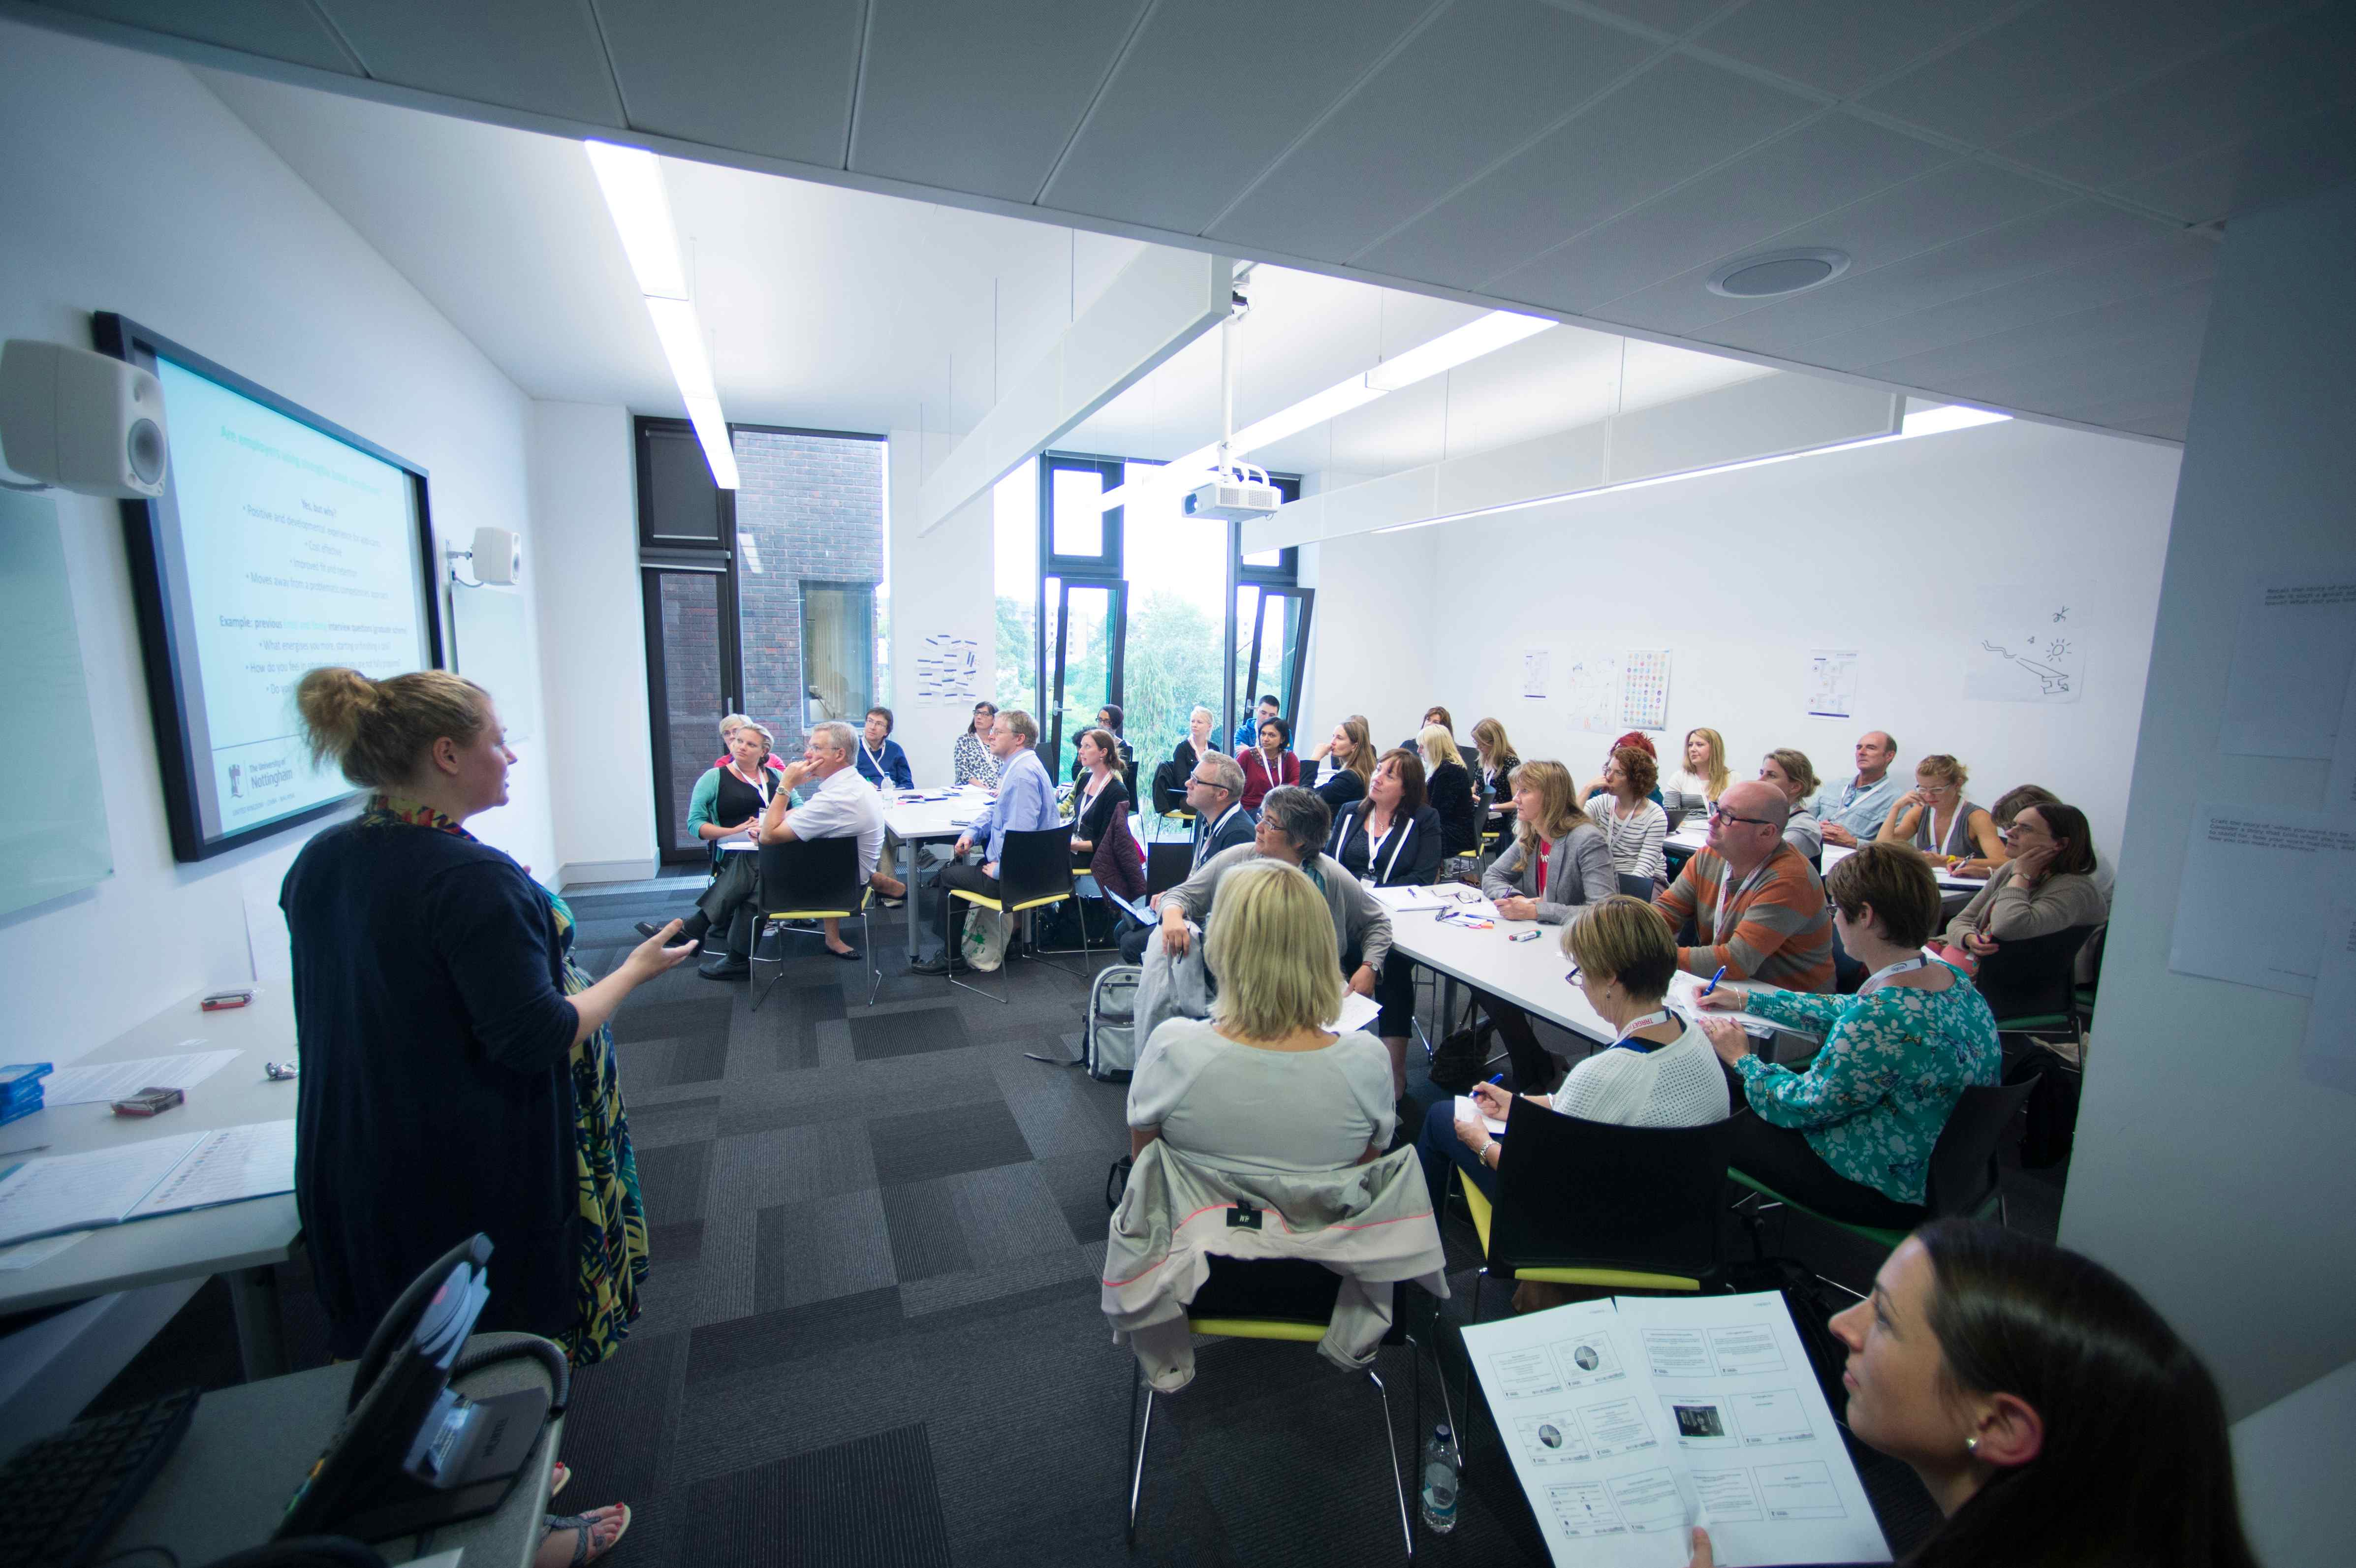 Forum Seminar Room (12 of), University of Exeter Forum 